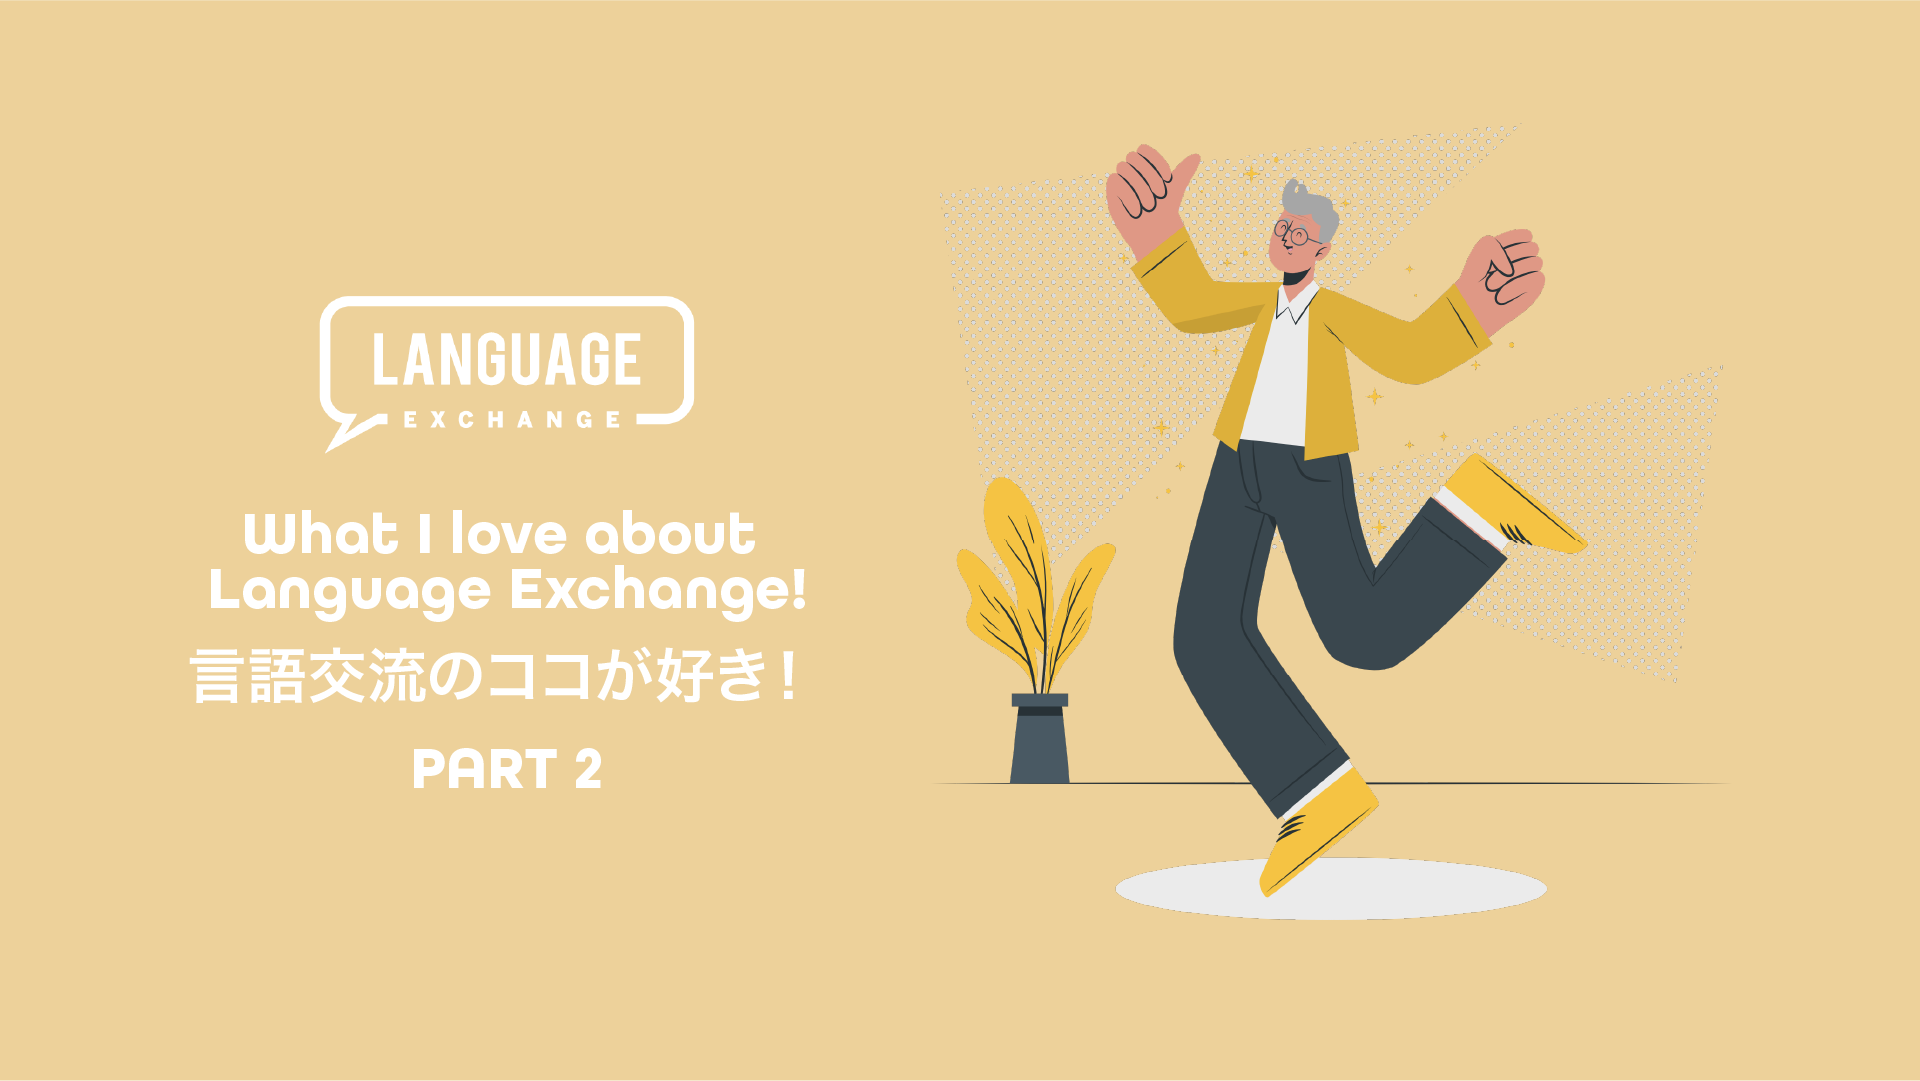 Featured image for “言語交流のココが好き！ PART 2”